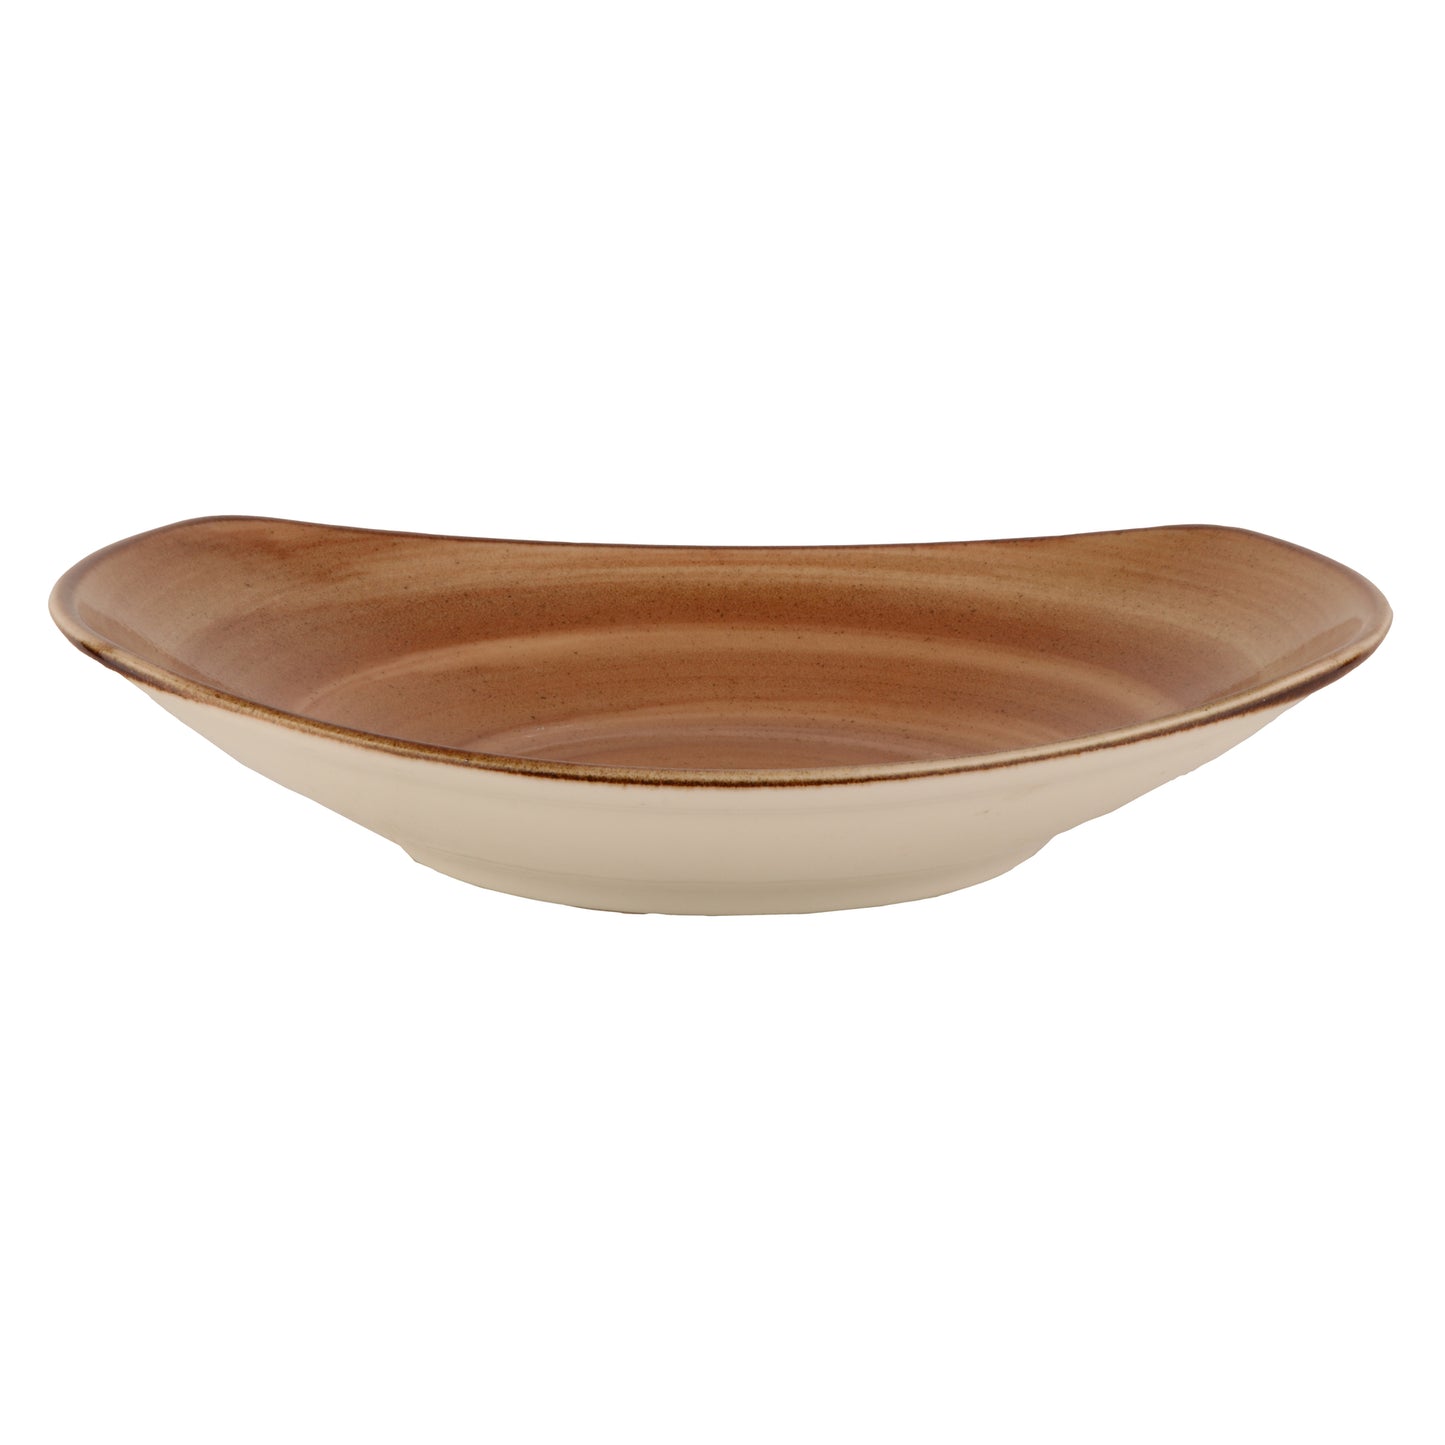 34.3 oz. Brown Porcelain Pasta Bowl, 10 5/8" x 9 3/4", Corona Artisan Brown (Stocked) (12 Pack)